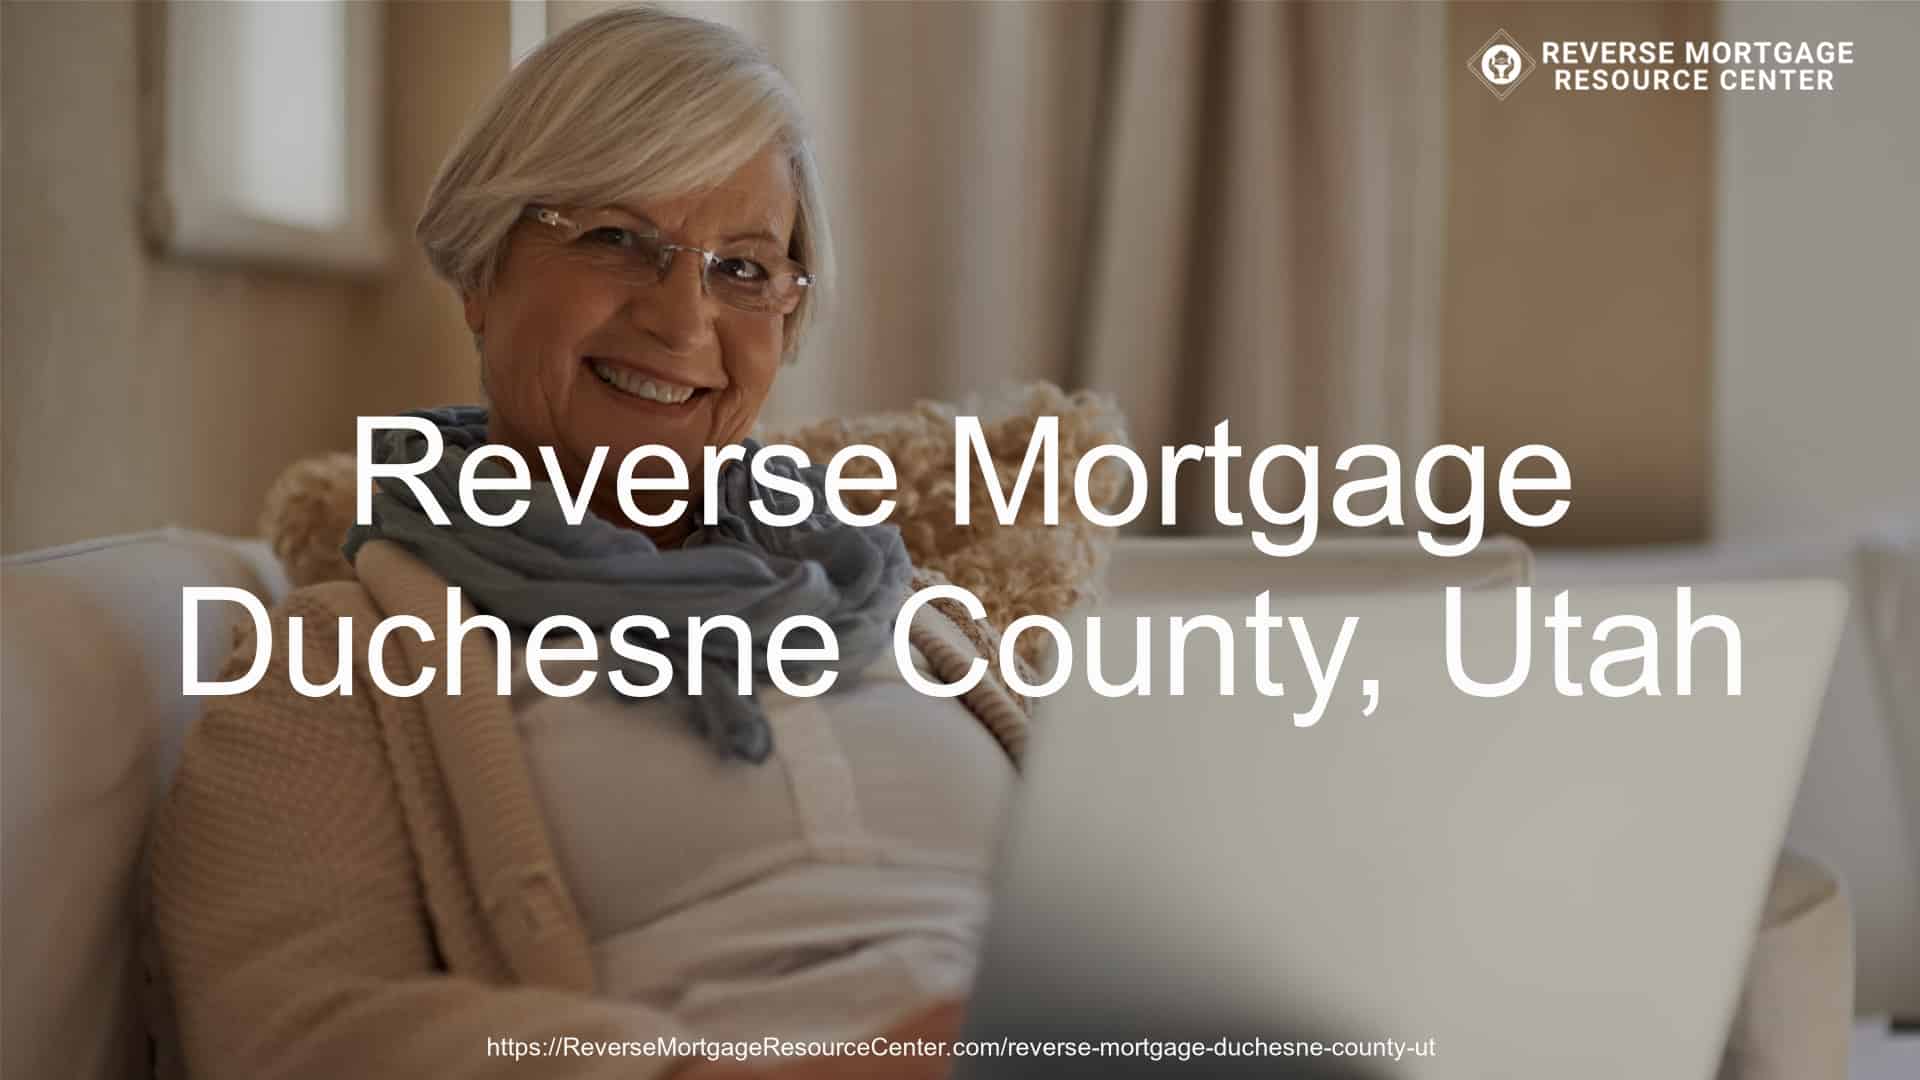 Reverse Mortgage Loans in Duchesne County Utah